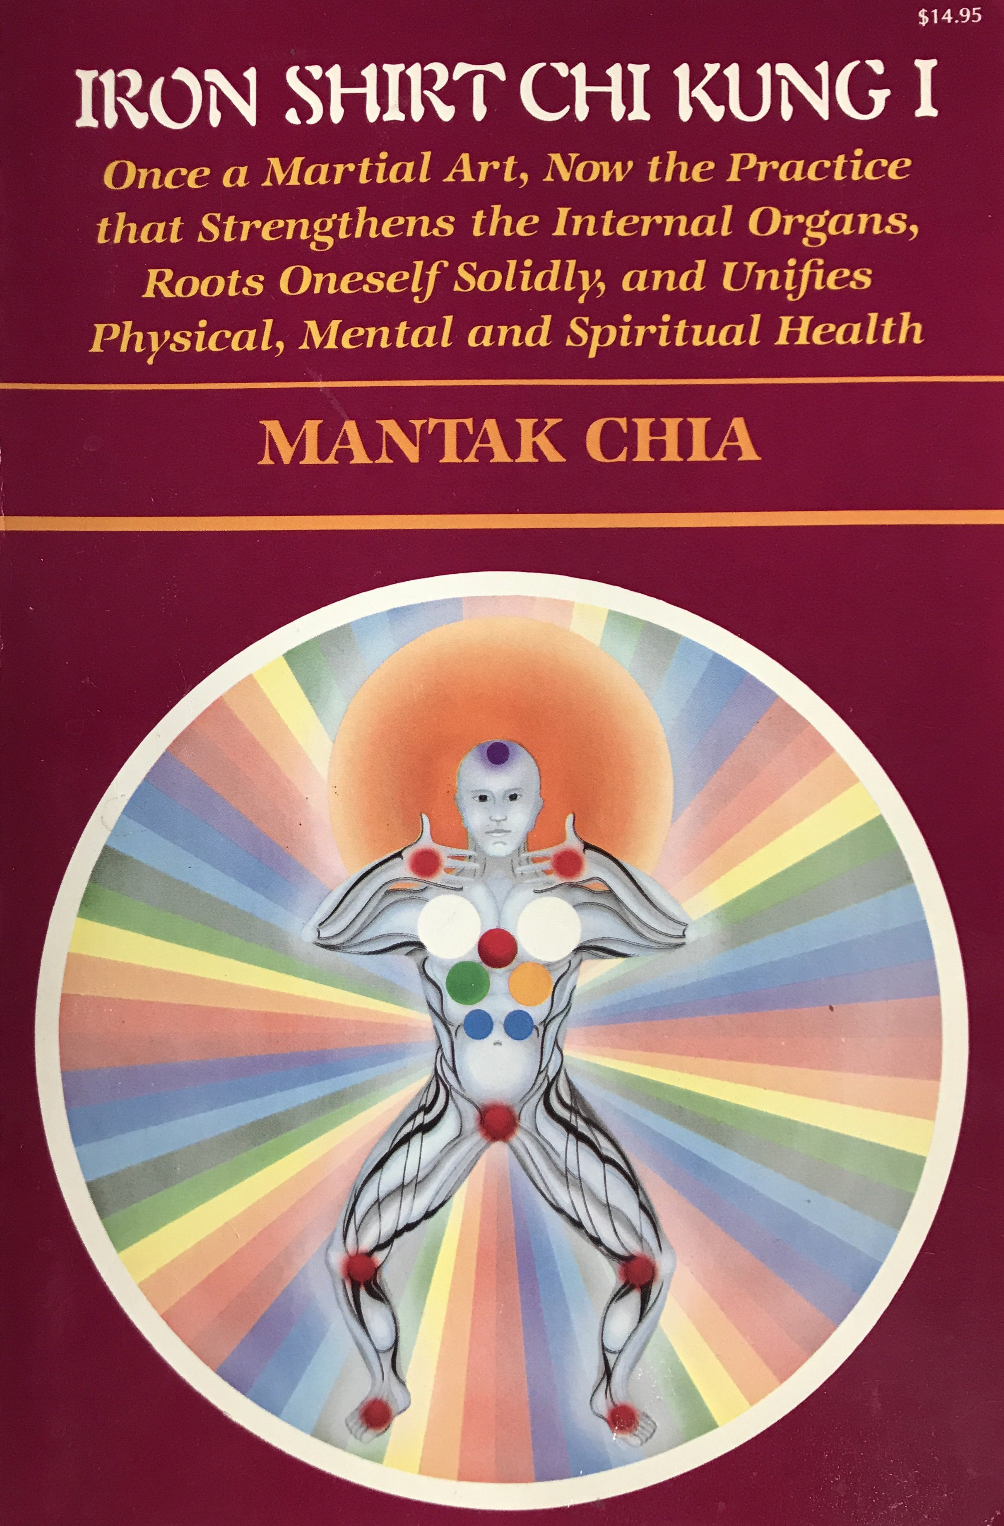 Iron Shirt Chi Kung I Book by Mantak Chia (Preowned) - Budovideos Inc